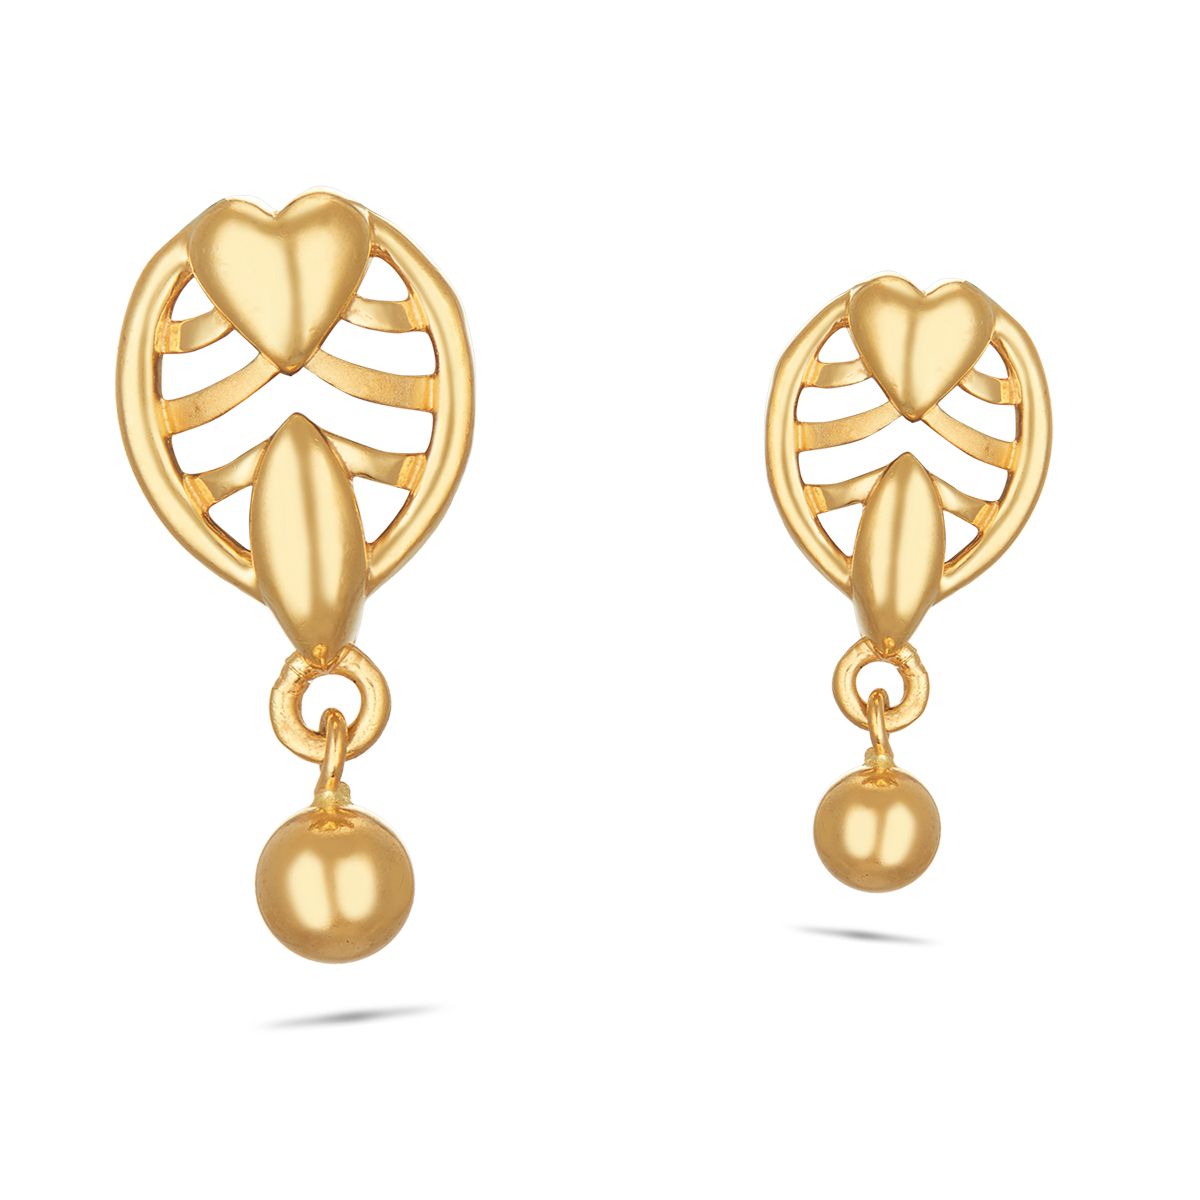 Yellow Earrings Design - Gold Stud Earrings - Stud Earrings for Girls -  Vivacious Studs by Blingvine